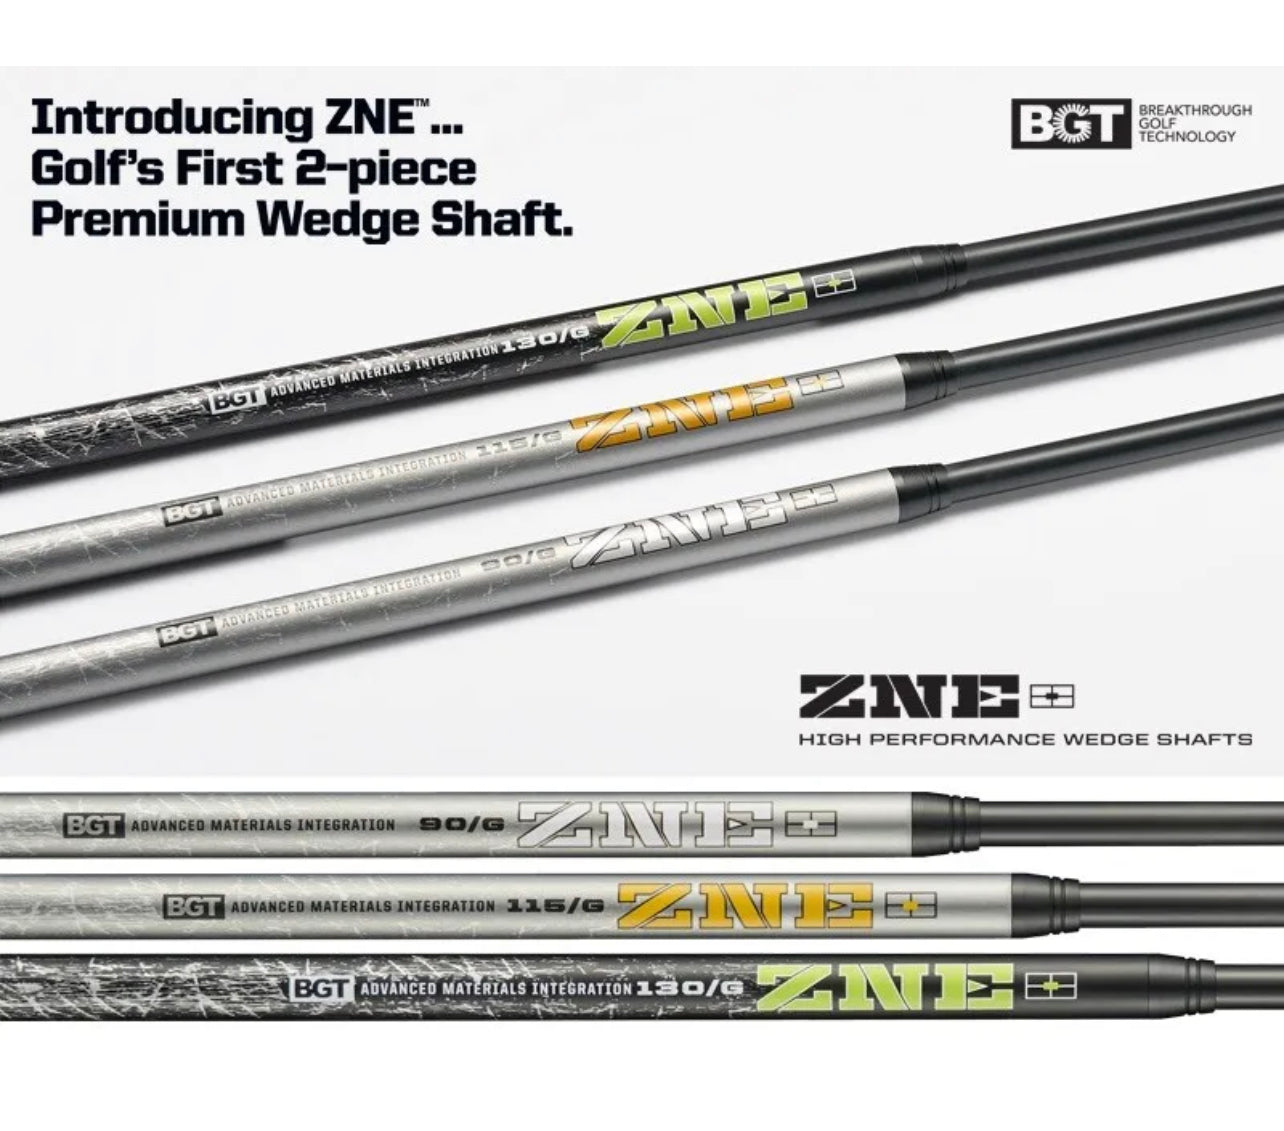 Breakthrough Golf Technology ZNE High Performance Wedge Shaft